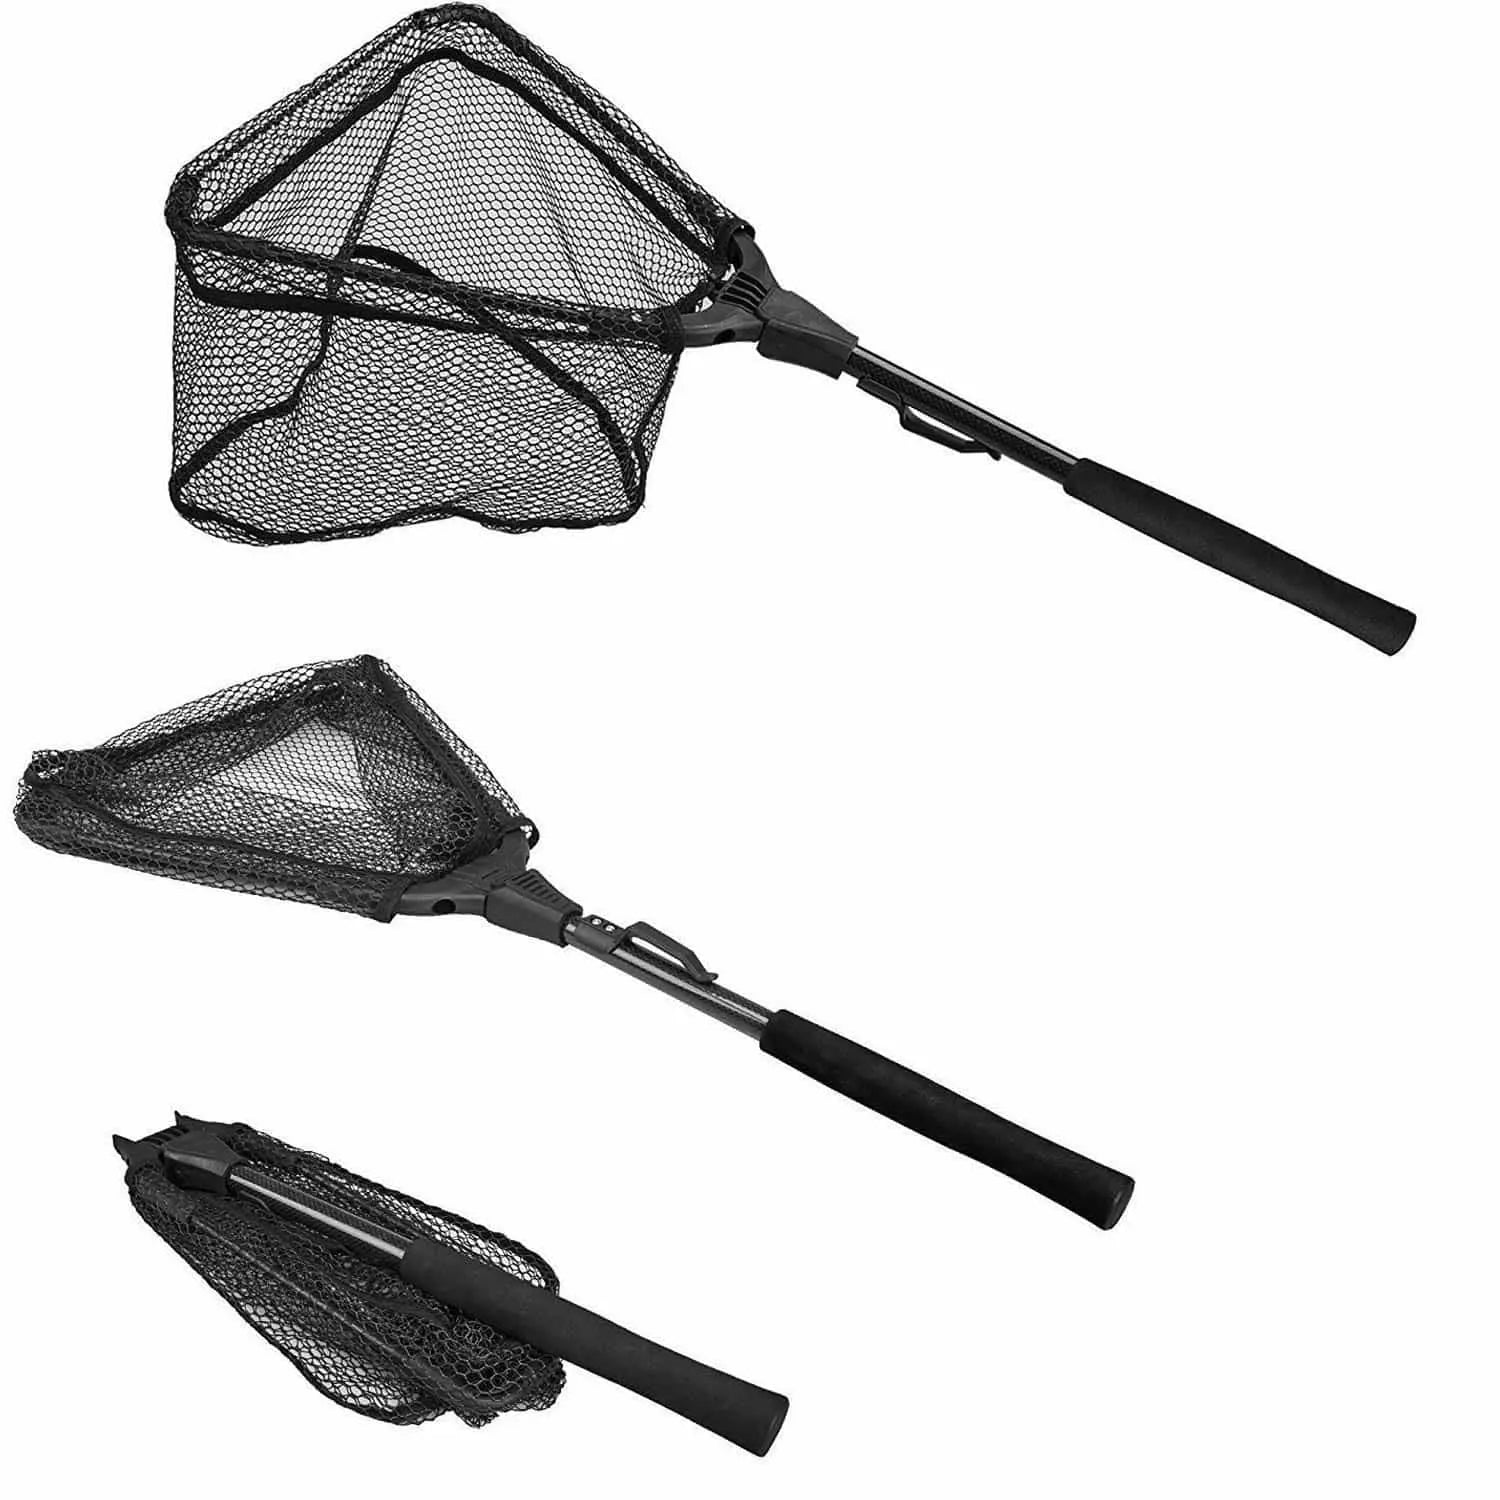 PLUSINNO FN9 Fish Landing Net with Foldable Telescopic Pole Handle